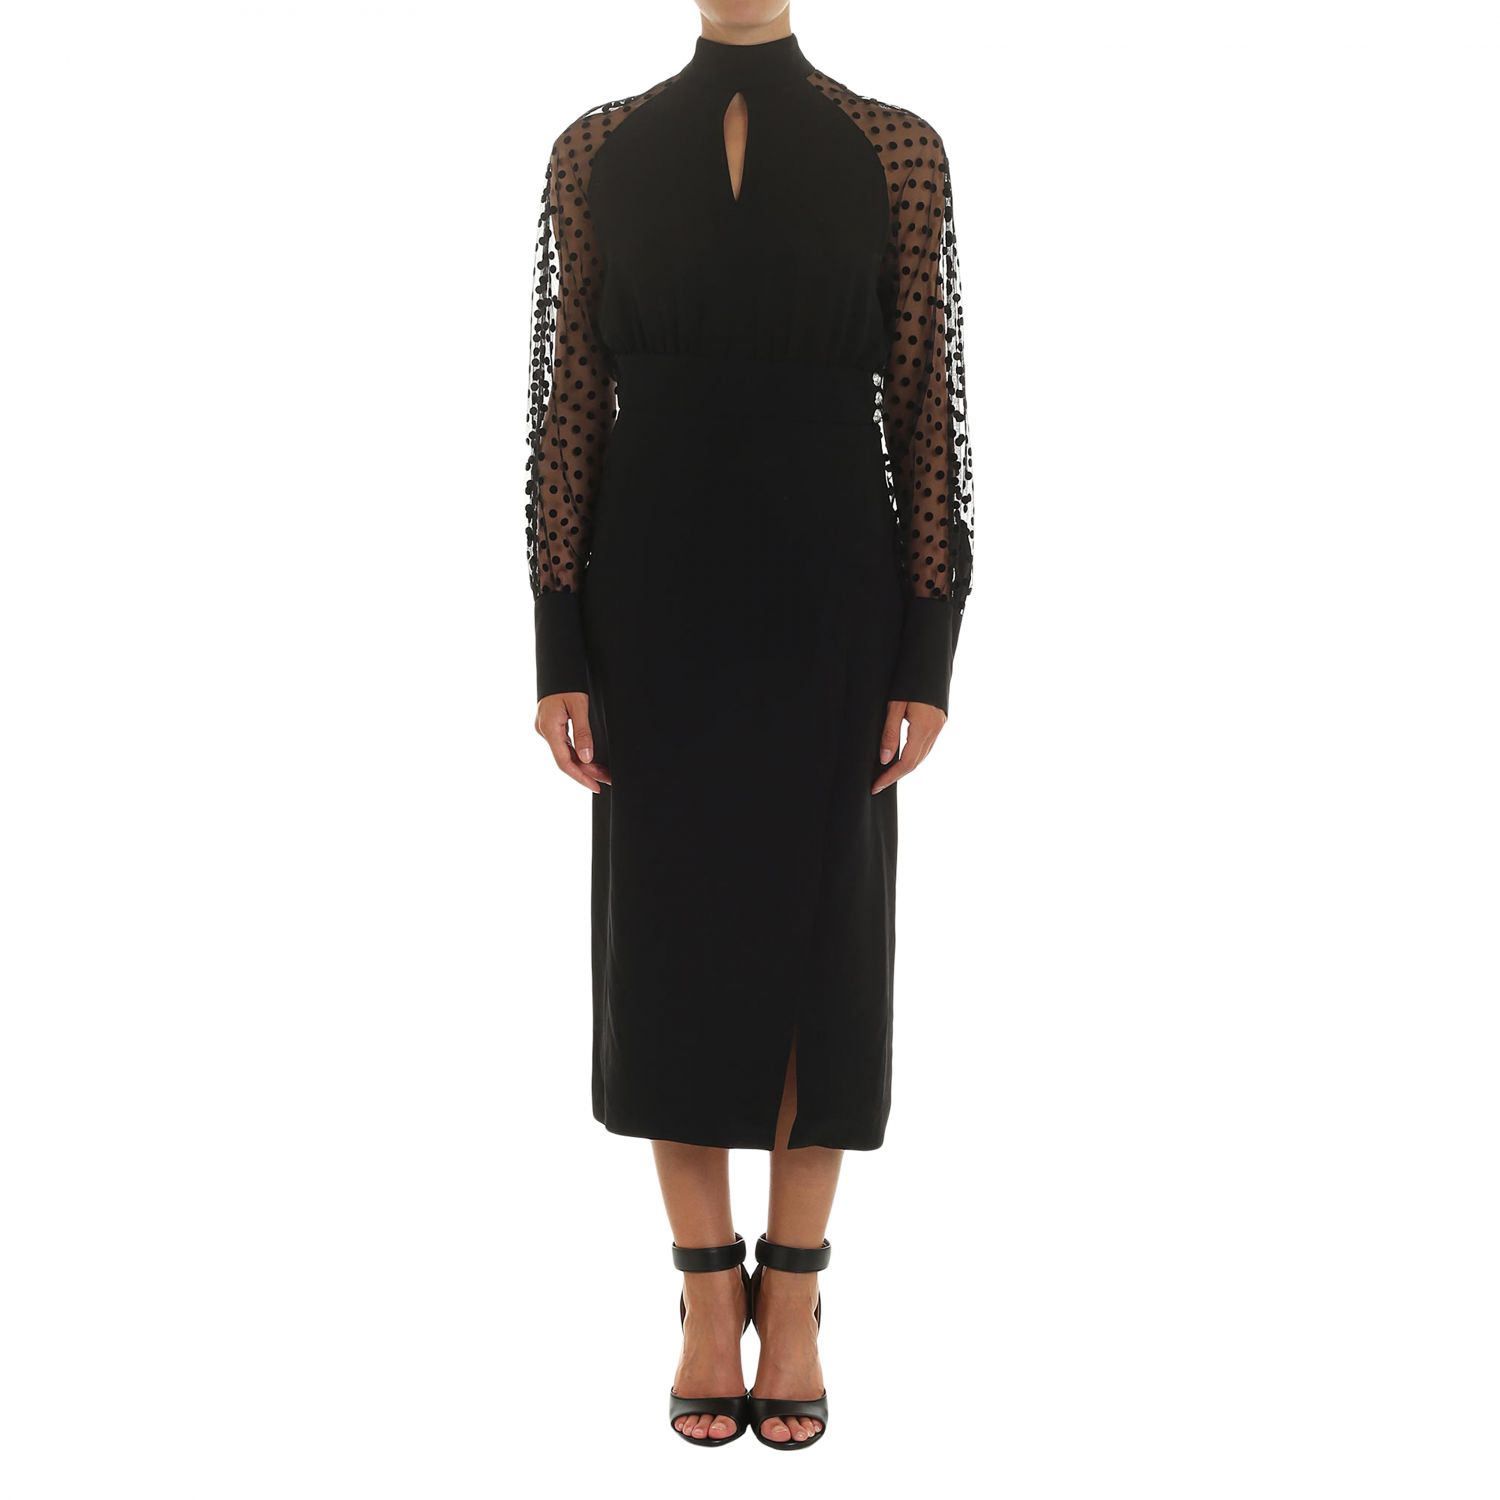 BALMAIN: dress for women - Black | Balmain dress SF06889X279 online on ...